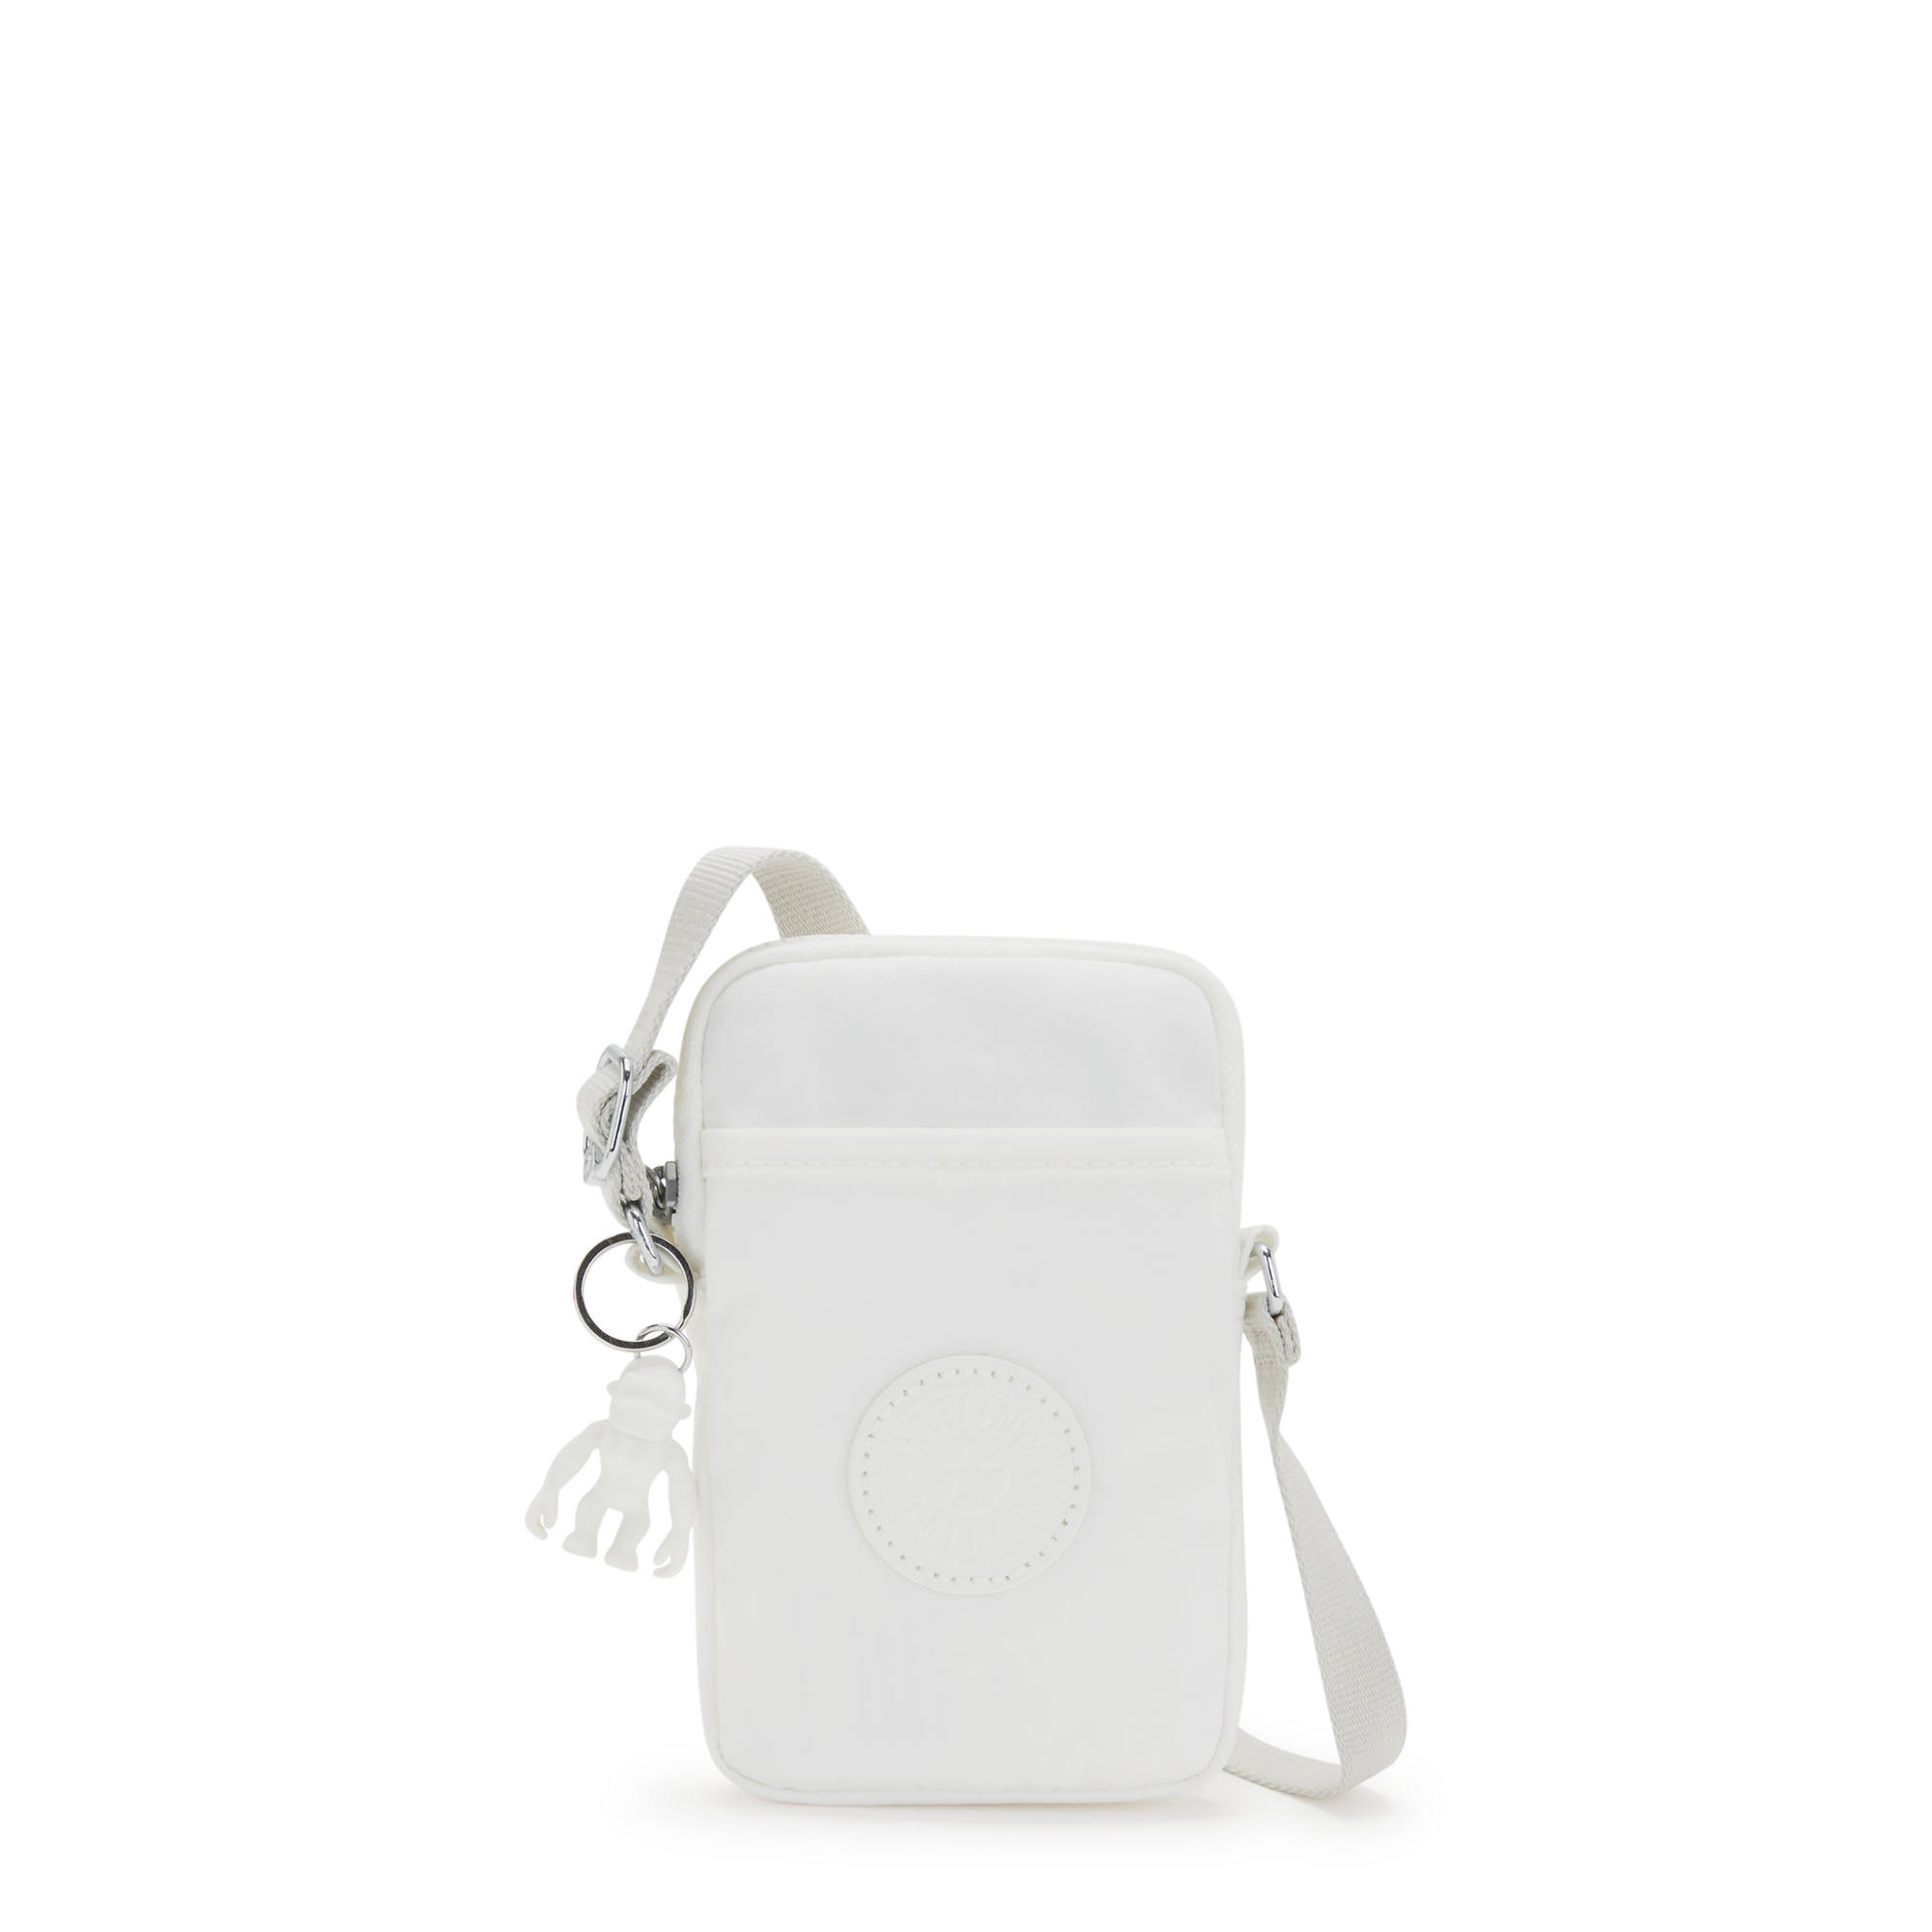 Kipling Tally Crossbody Phone Bag - Endless Lilac Fun • Price »